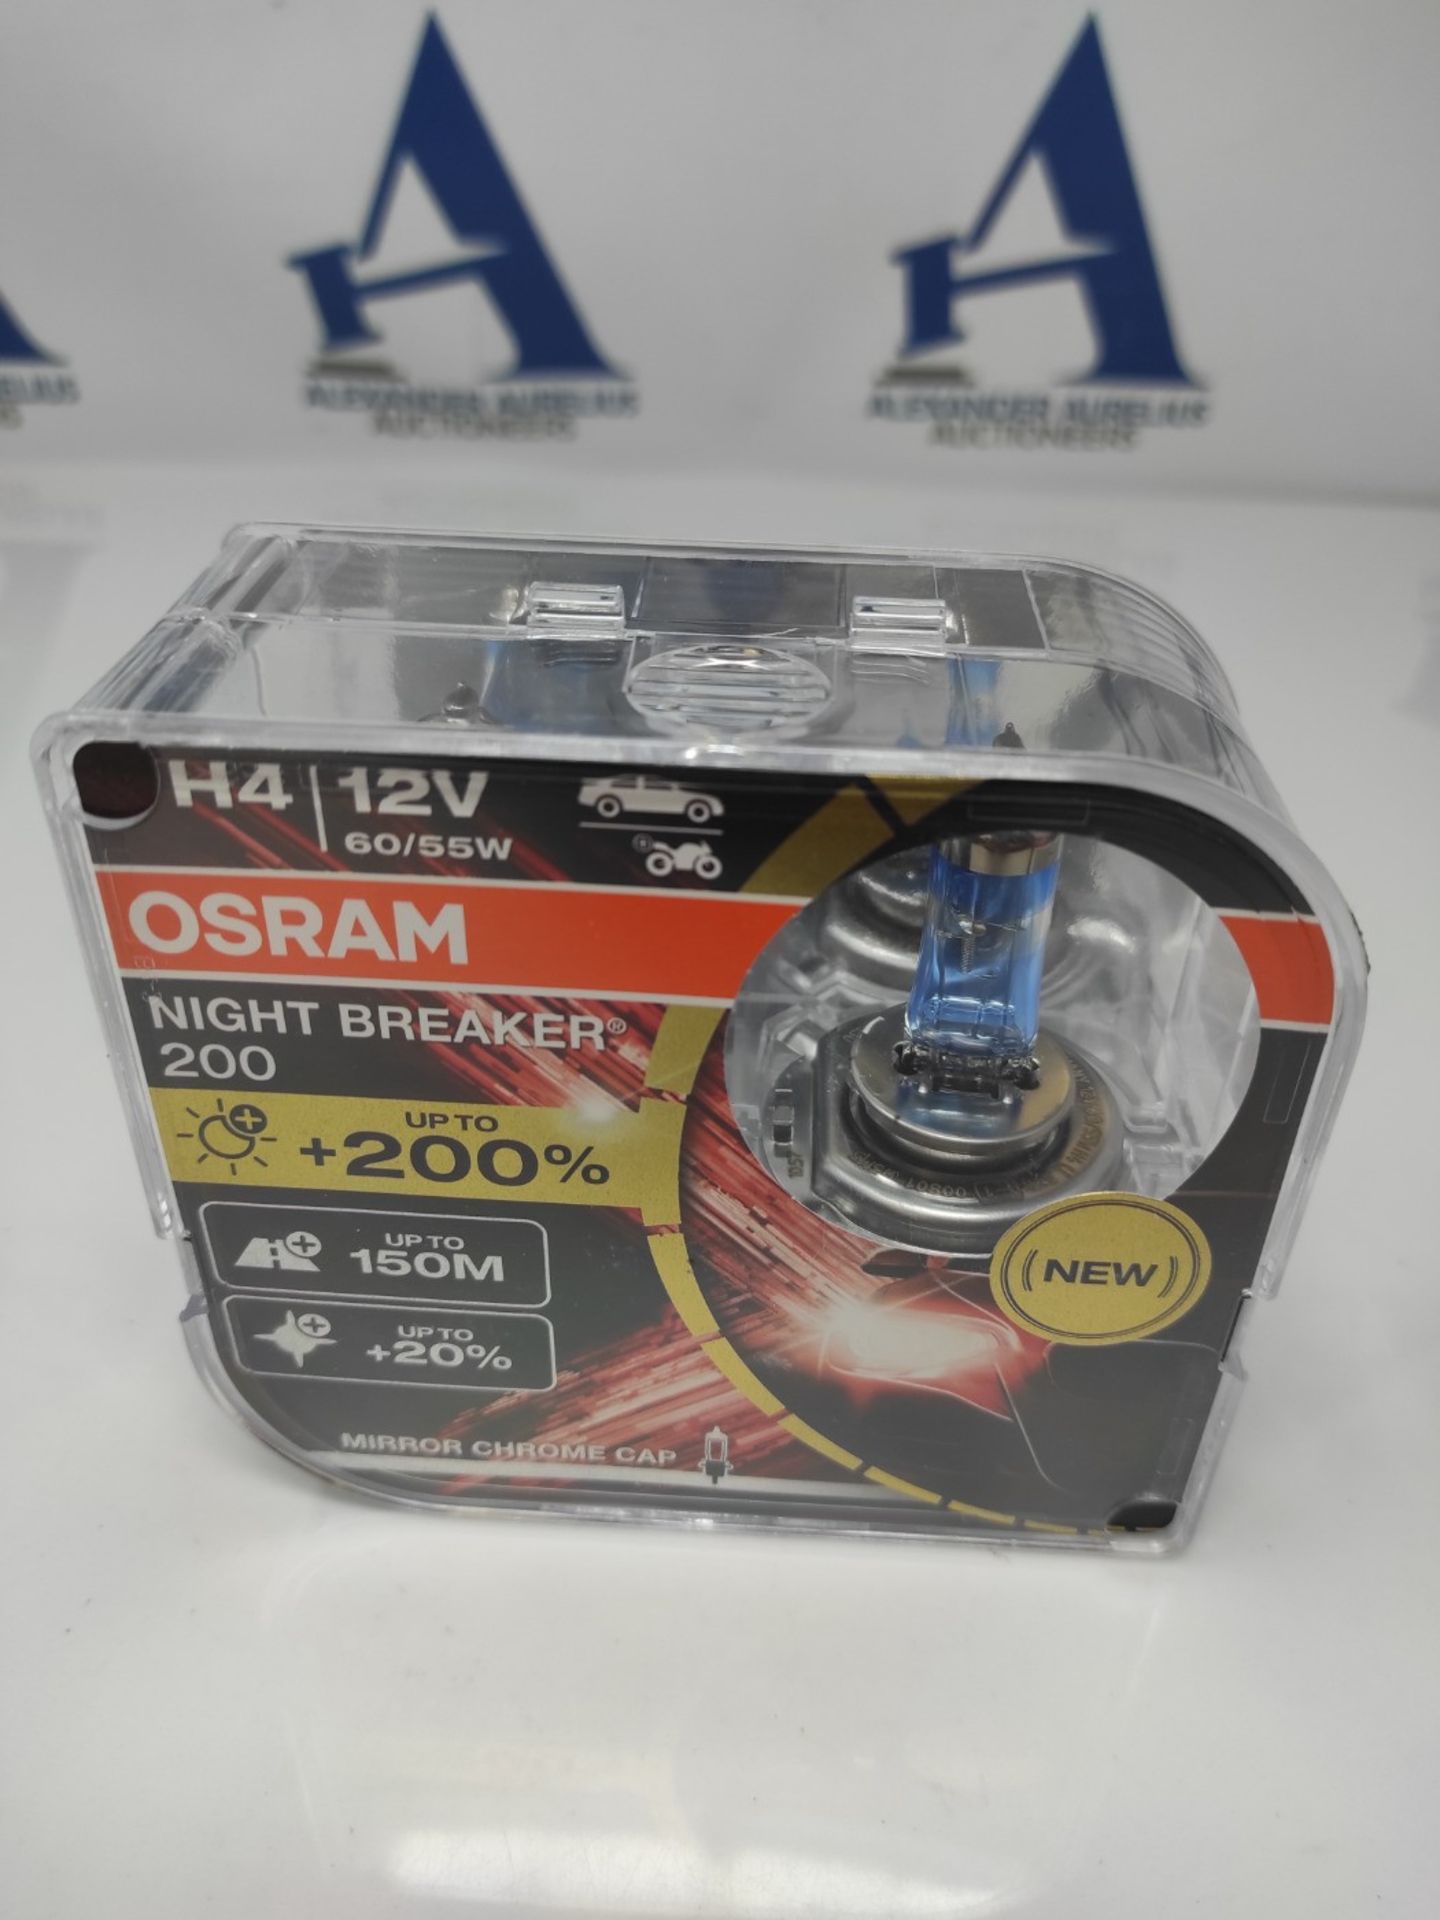 [NEW] Osram NIGHT BREAKER 200, H4, +200% Light, Halogen lamp for headlights, 64193NB20 - Image 2 of 2